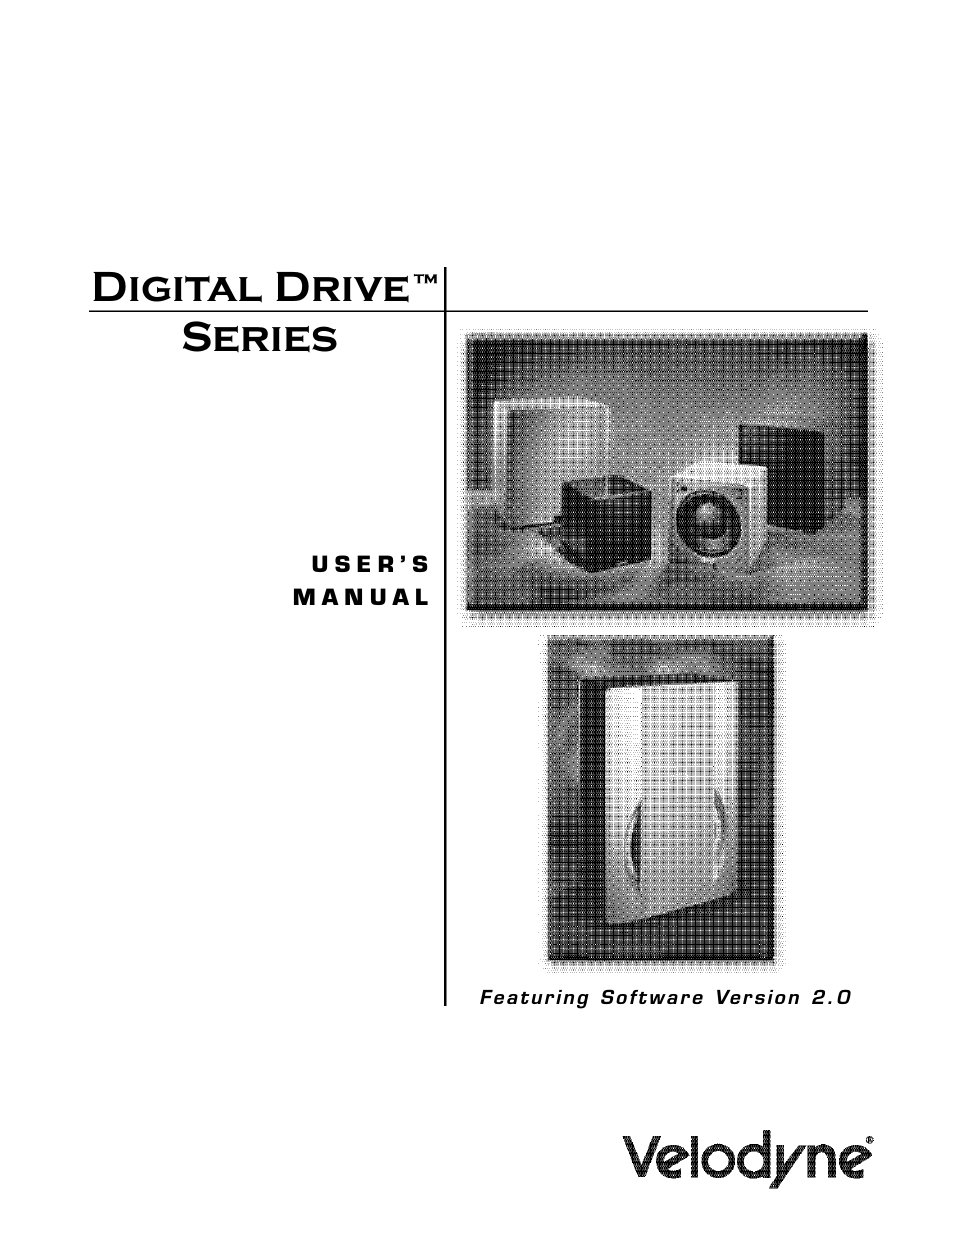 Digital Drive 1812 Signature Edition